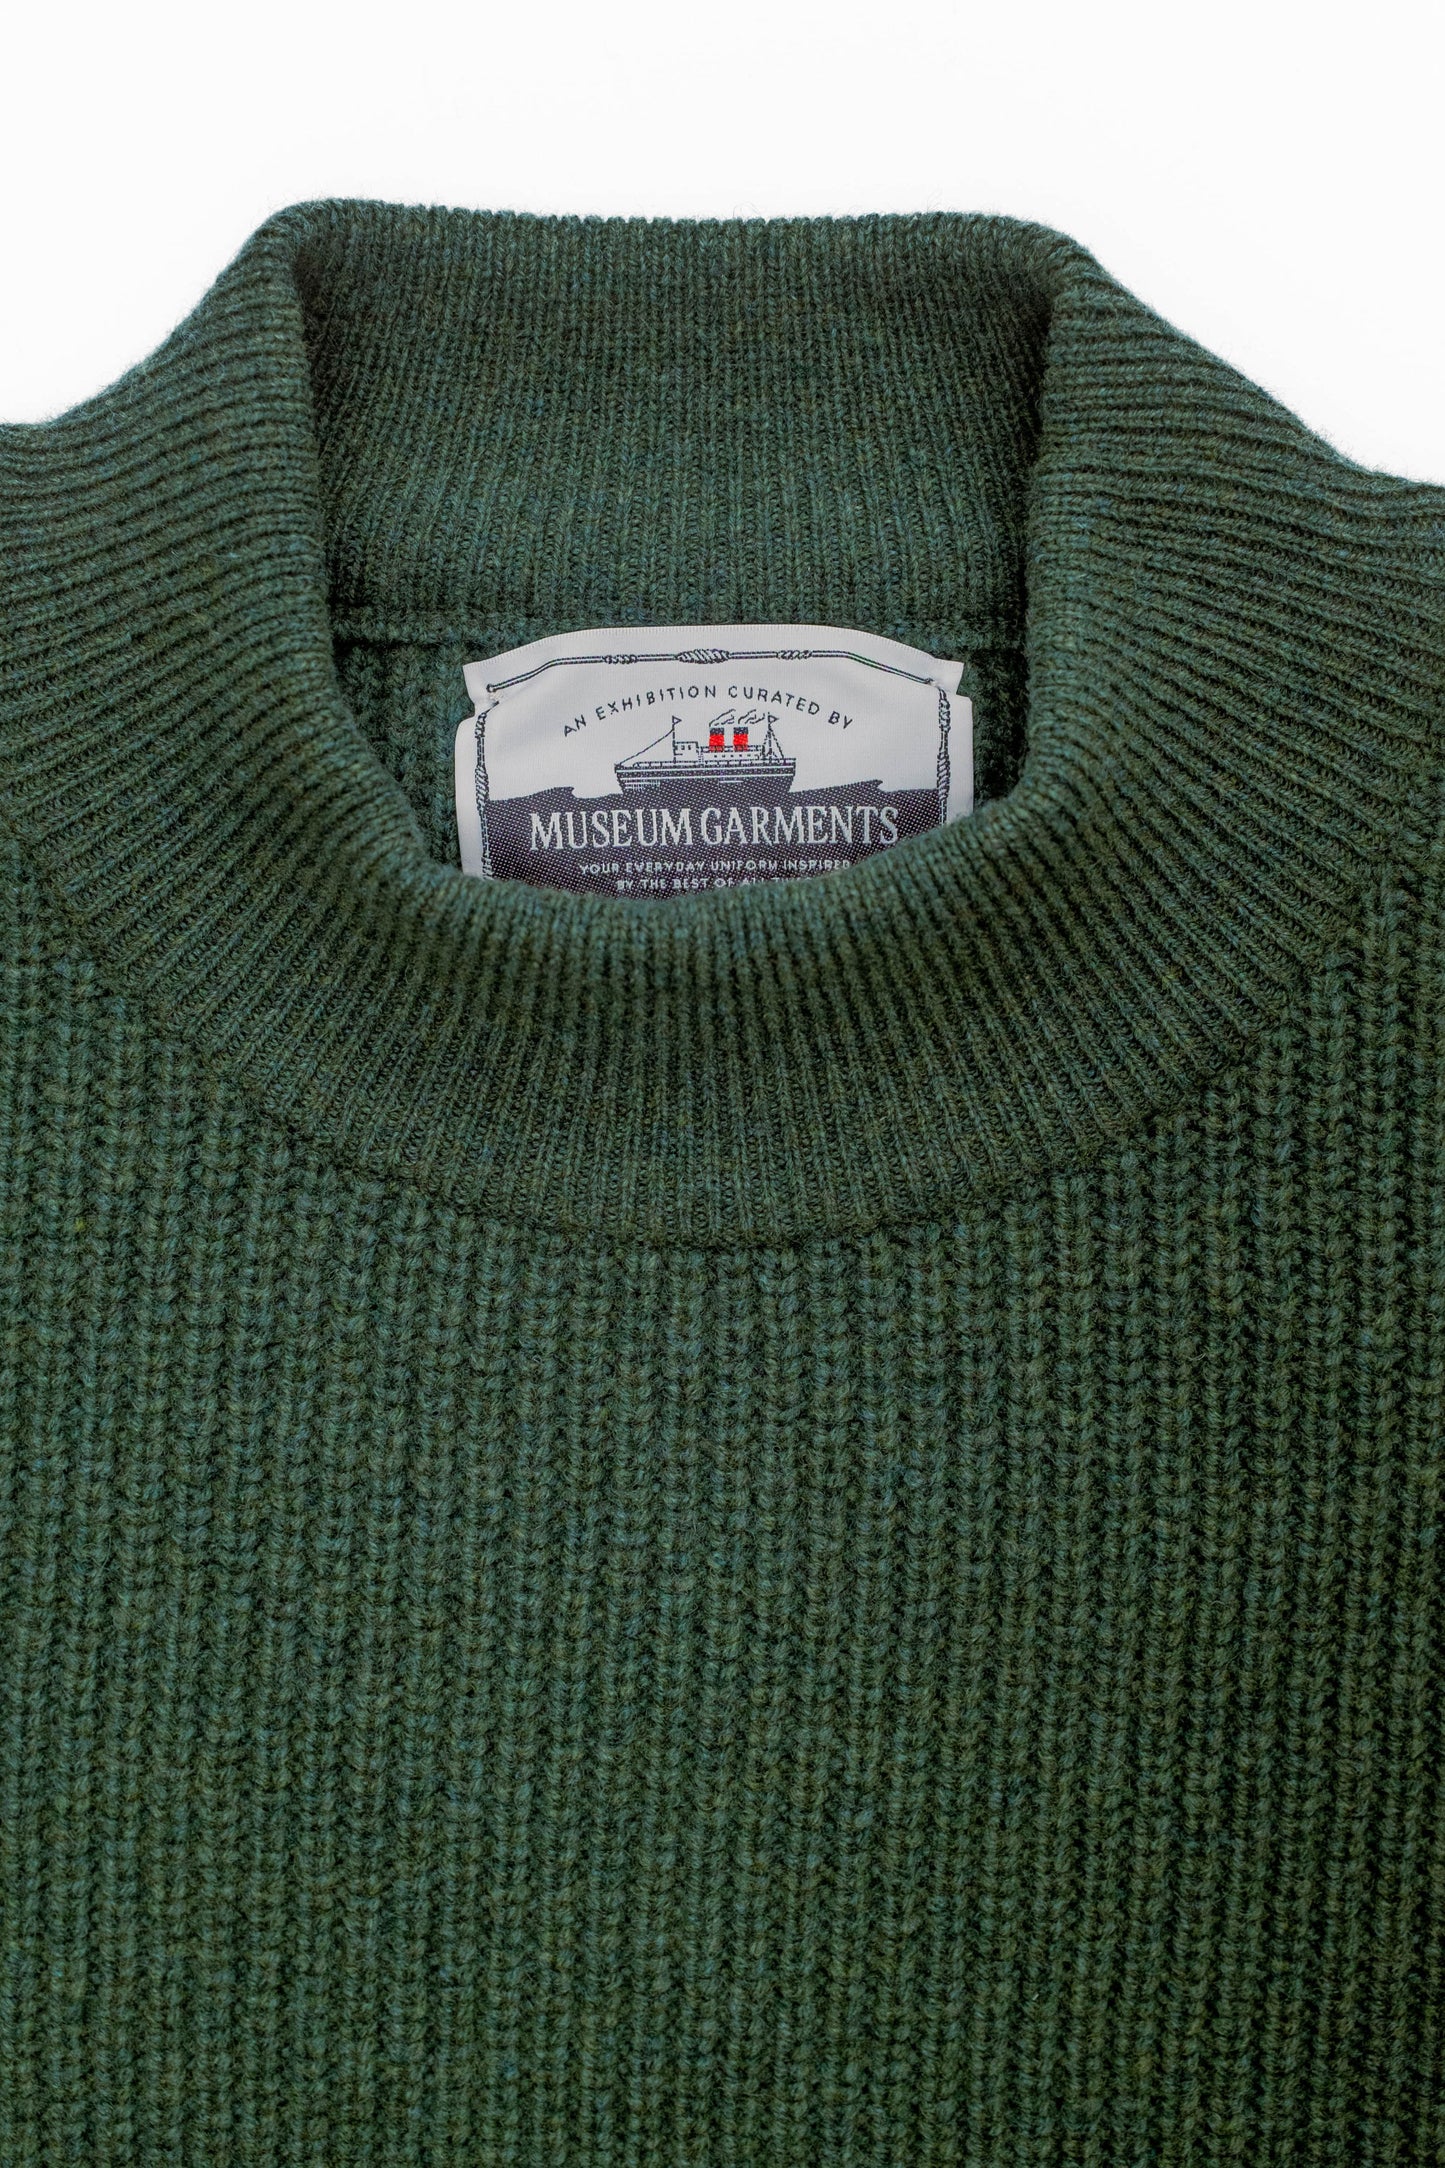 Deck Sweater en laine d'agneau - Vert